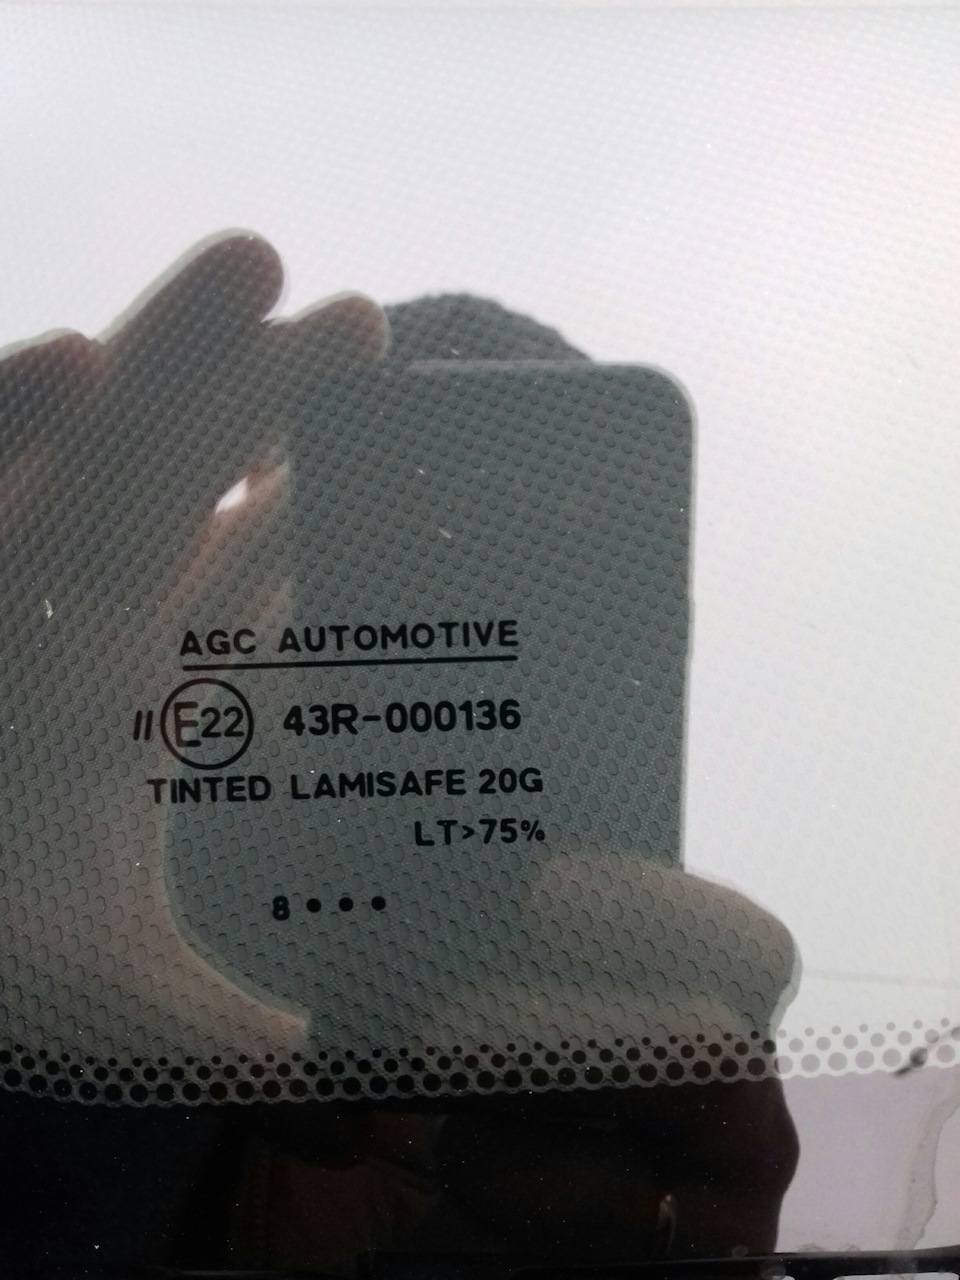 5 22 22 43. 43r-000136 стекло лобовое AGC. AGC Automotive е22 43r-000136 Tinted lamisafe 20g. Стекло KUVO 43r-011156. 43r-000136.